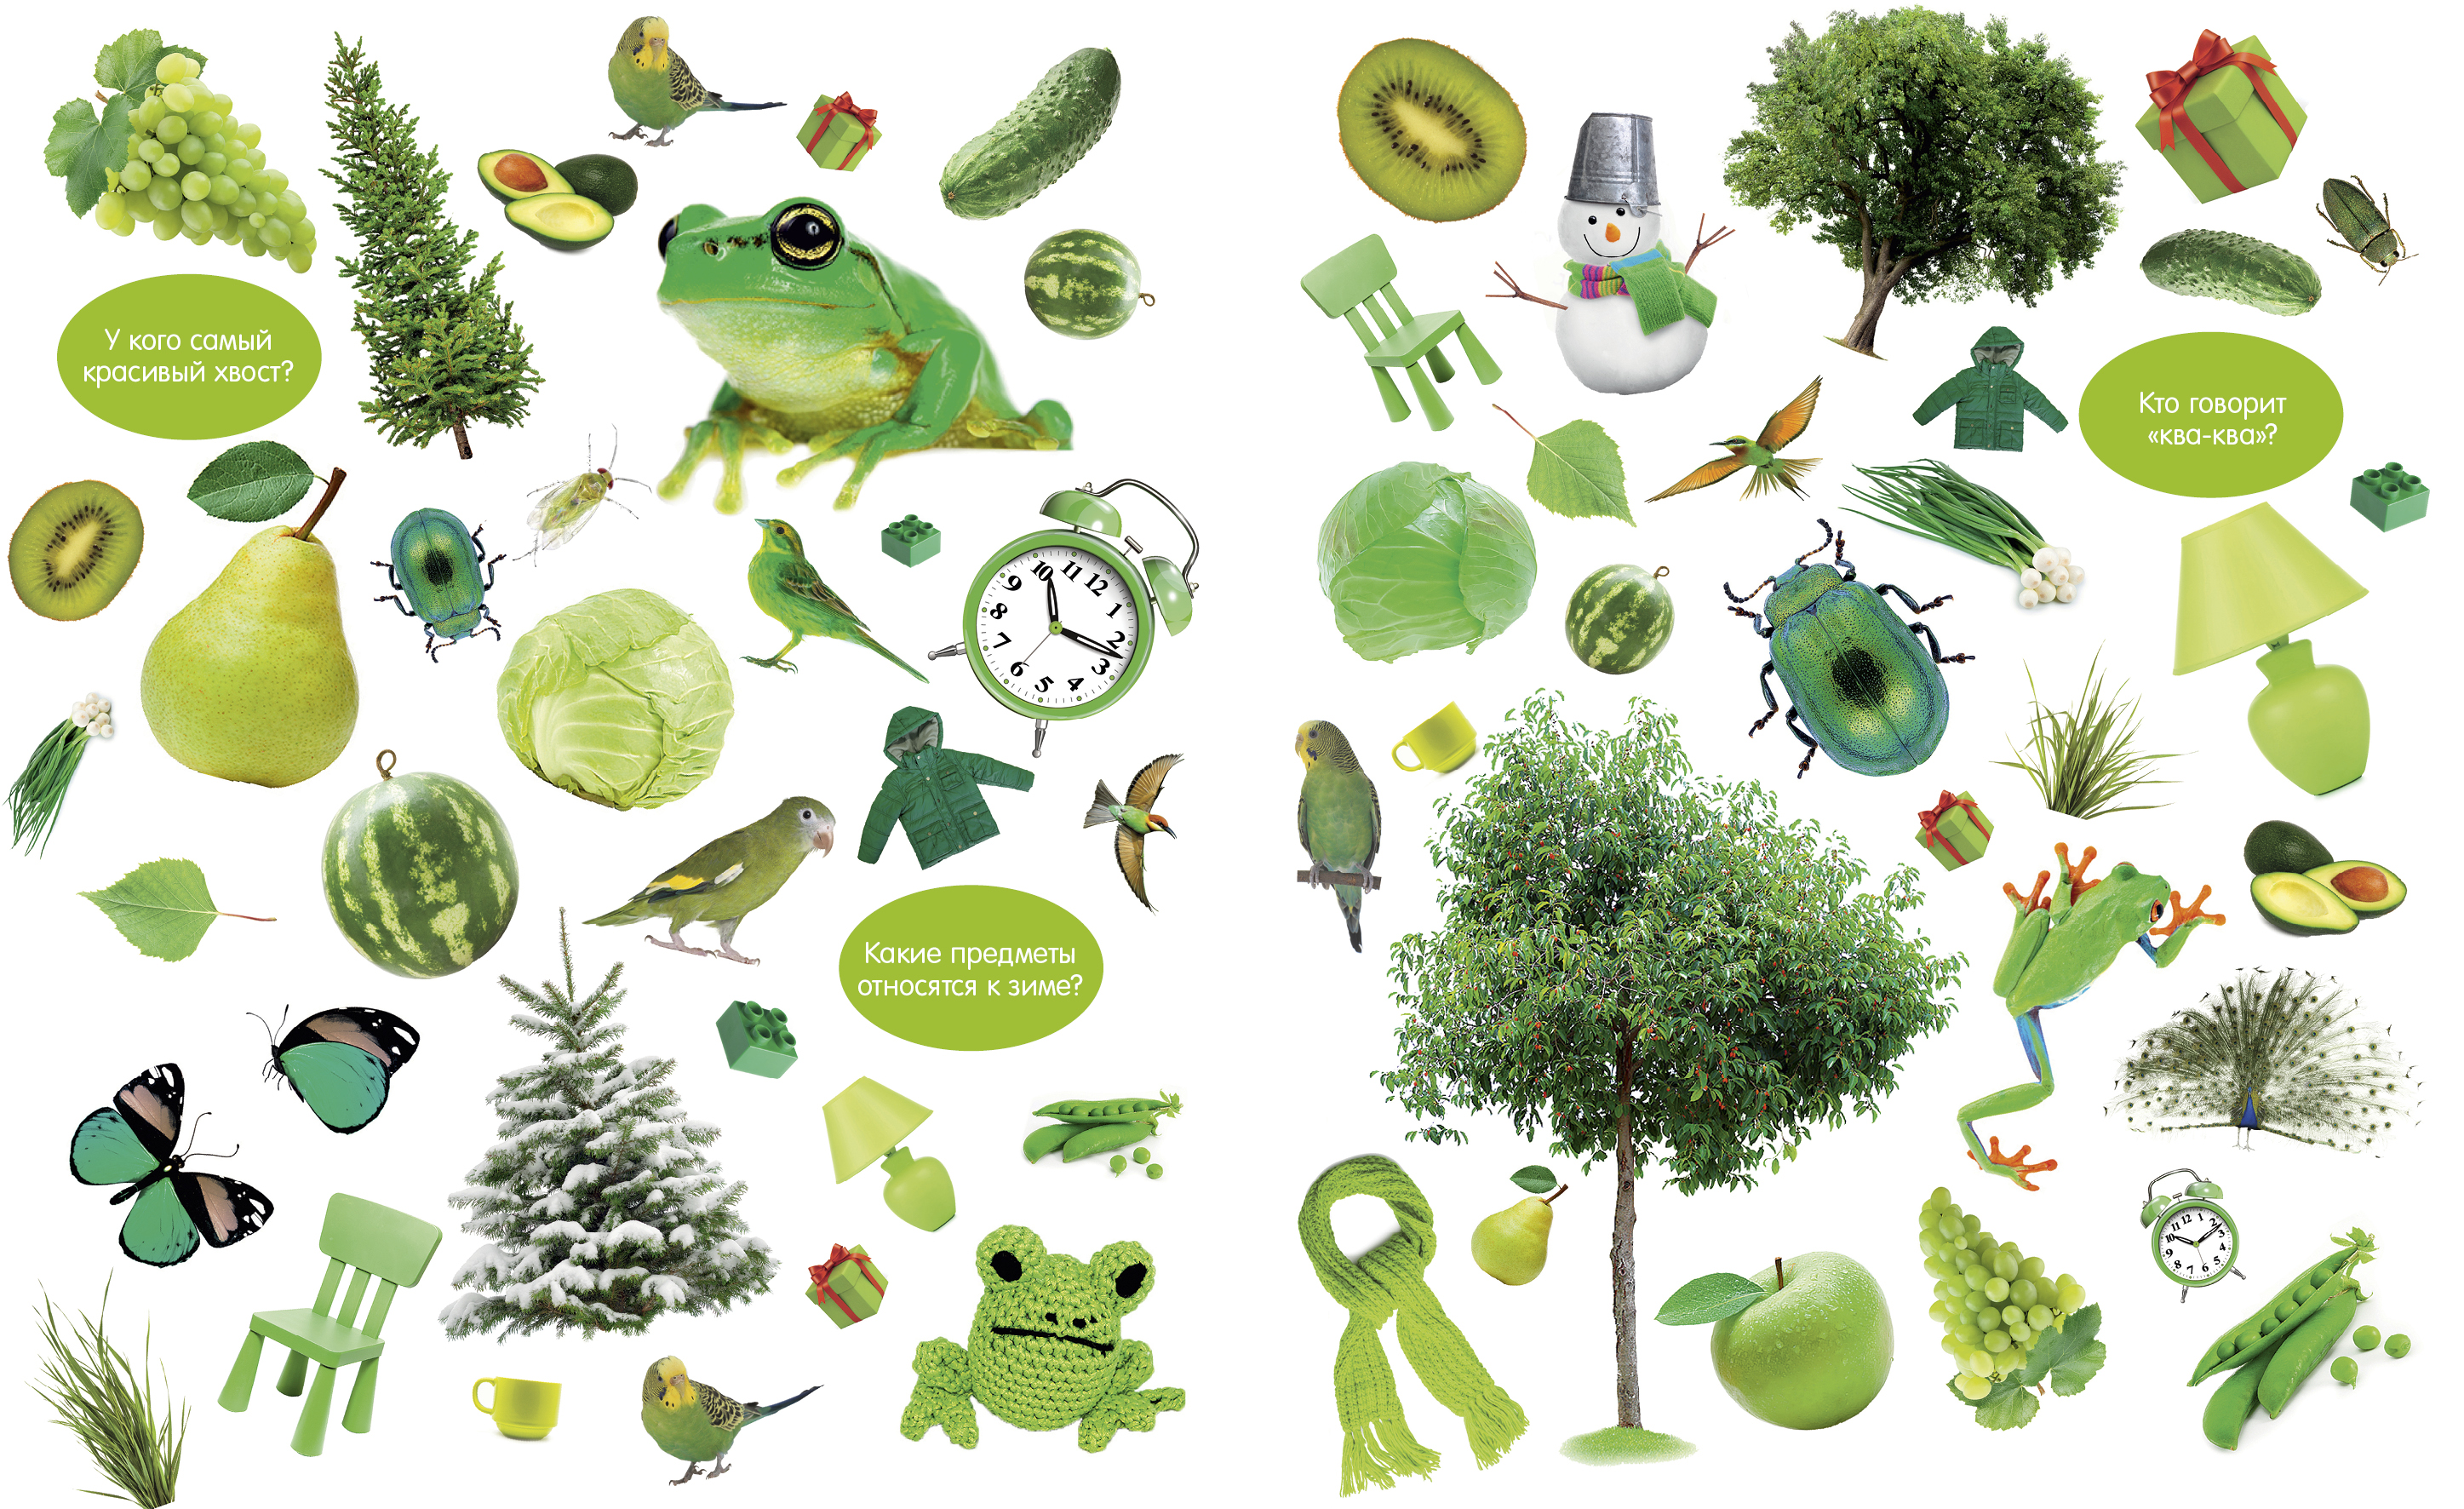 Green items